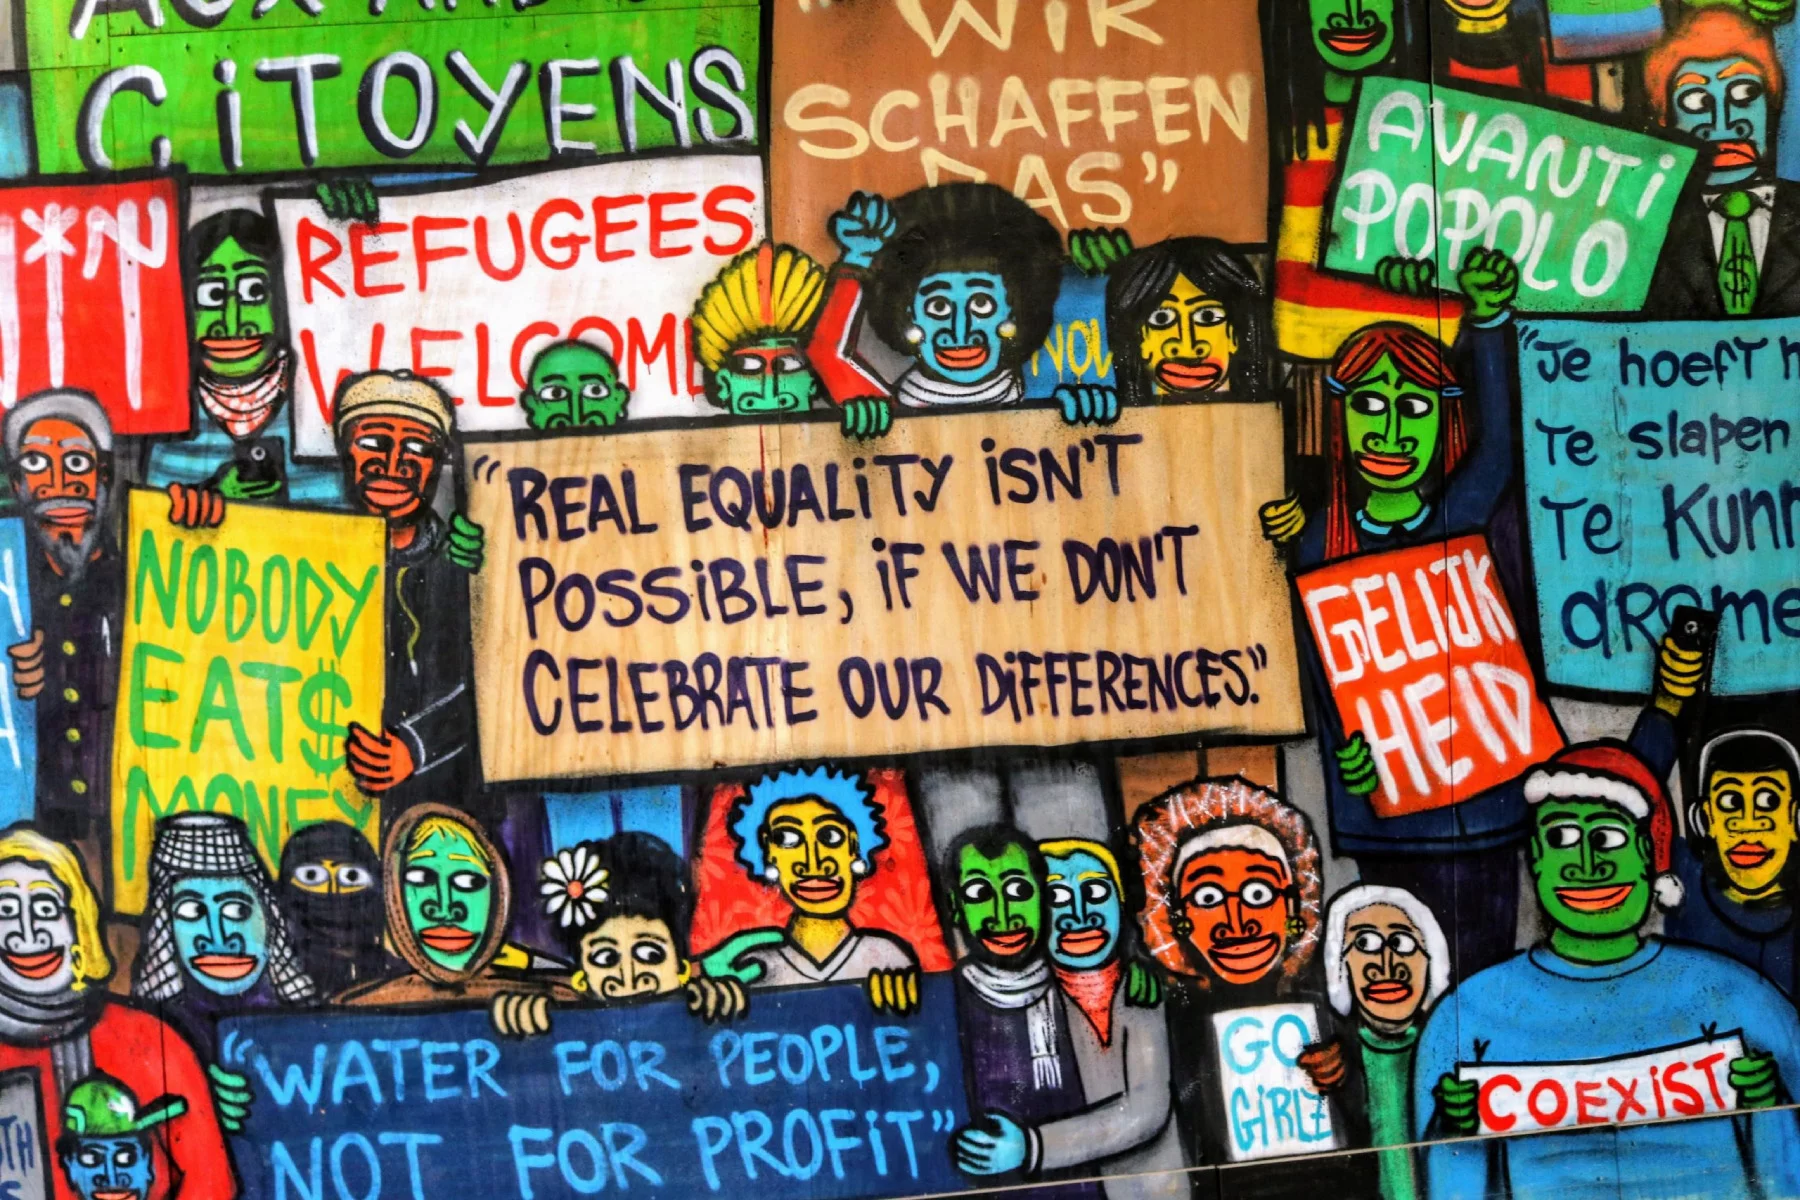 Wall art welcoming refugees